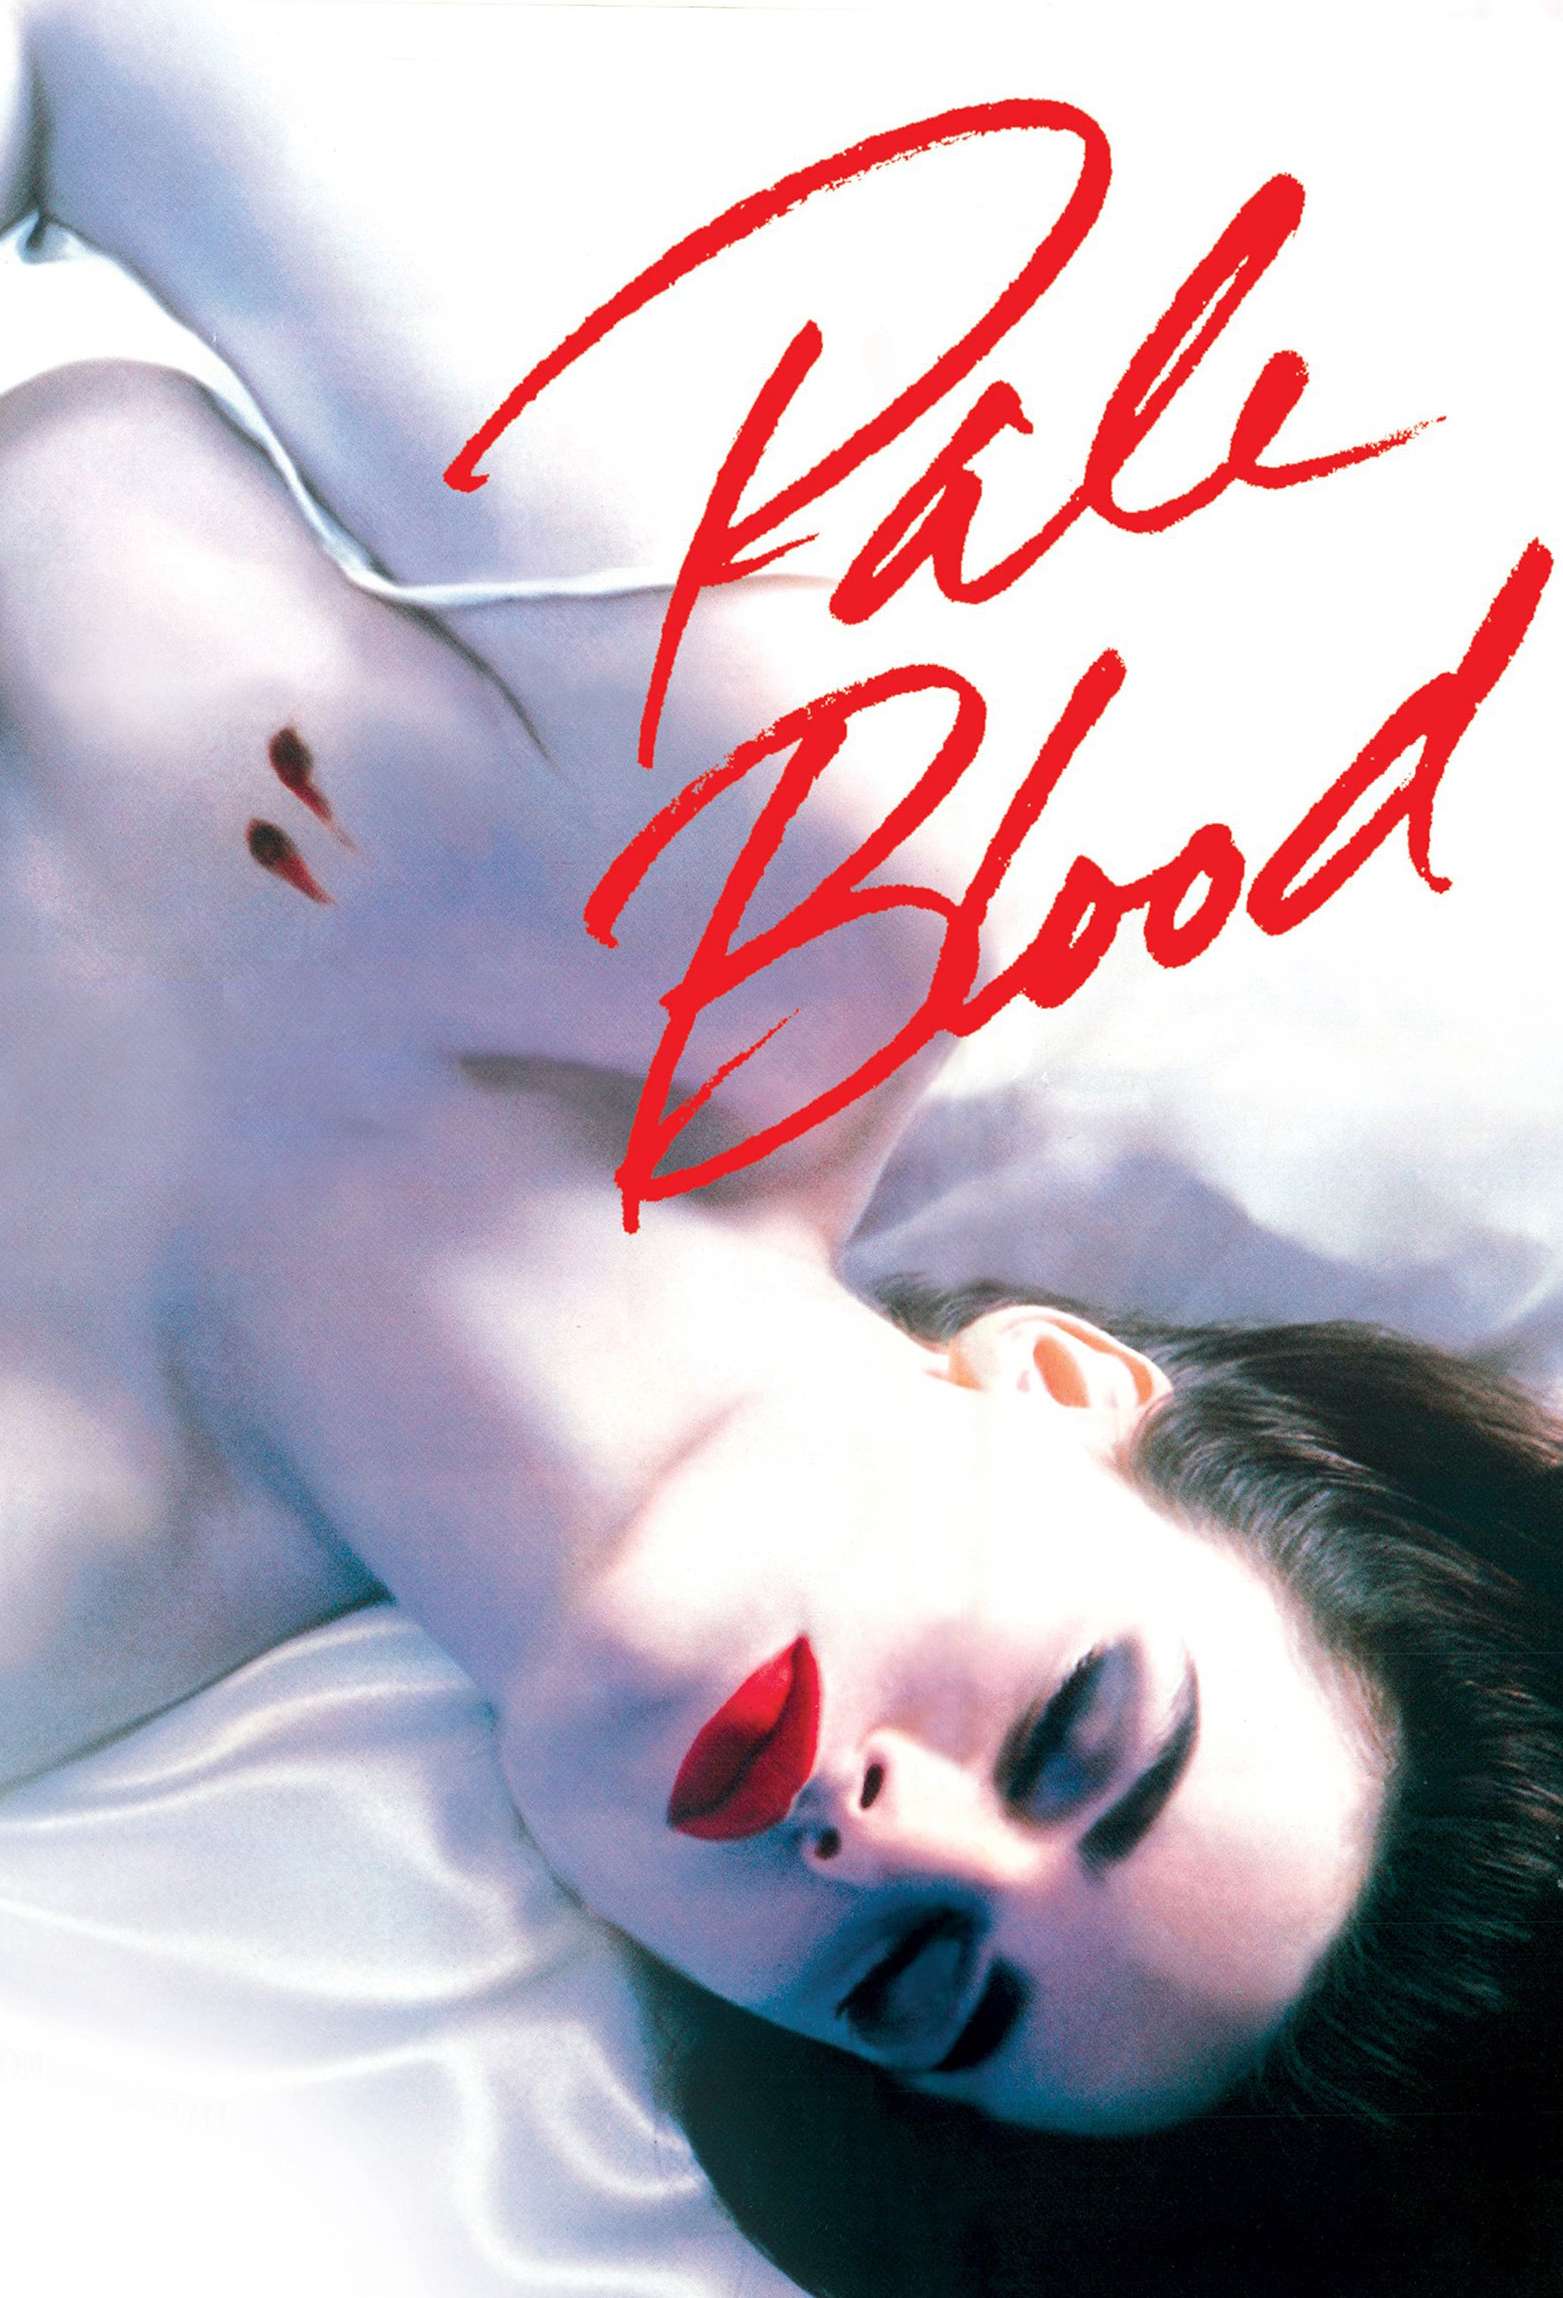 Pale Blood (1990)